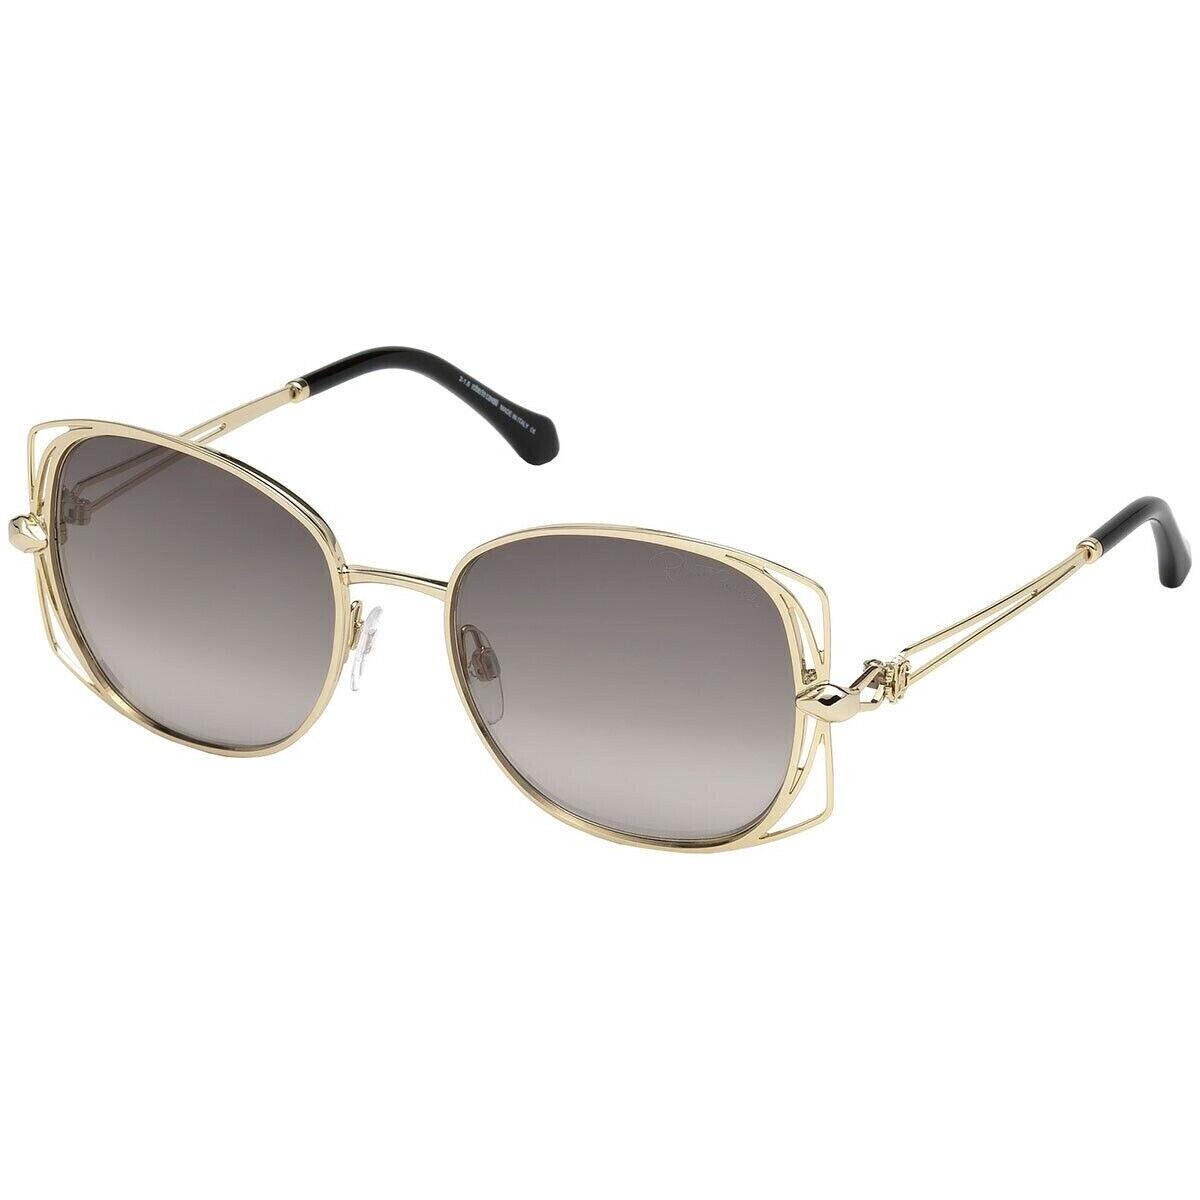 Roberto Cavalli Sunglasses RC1031 32B Gold Frames Smoke Lens 55MM